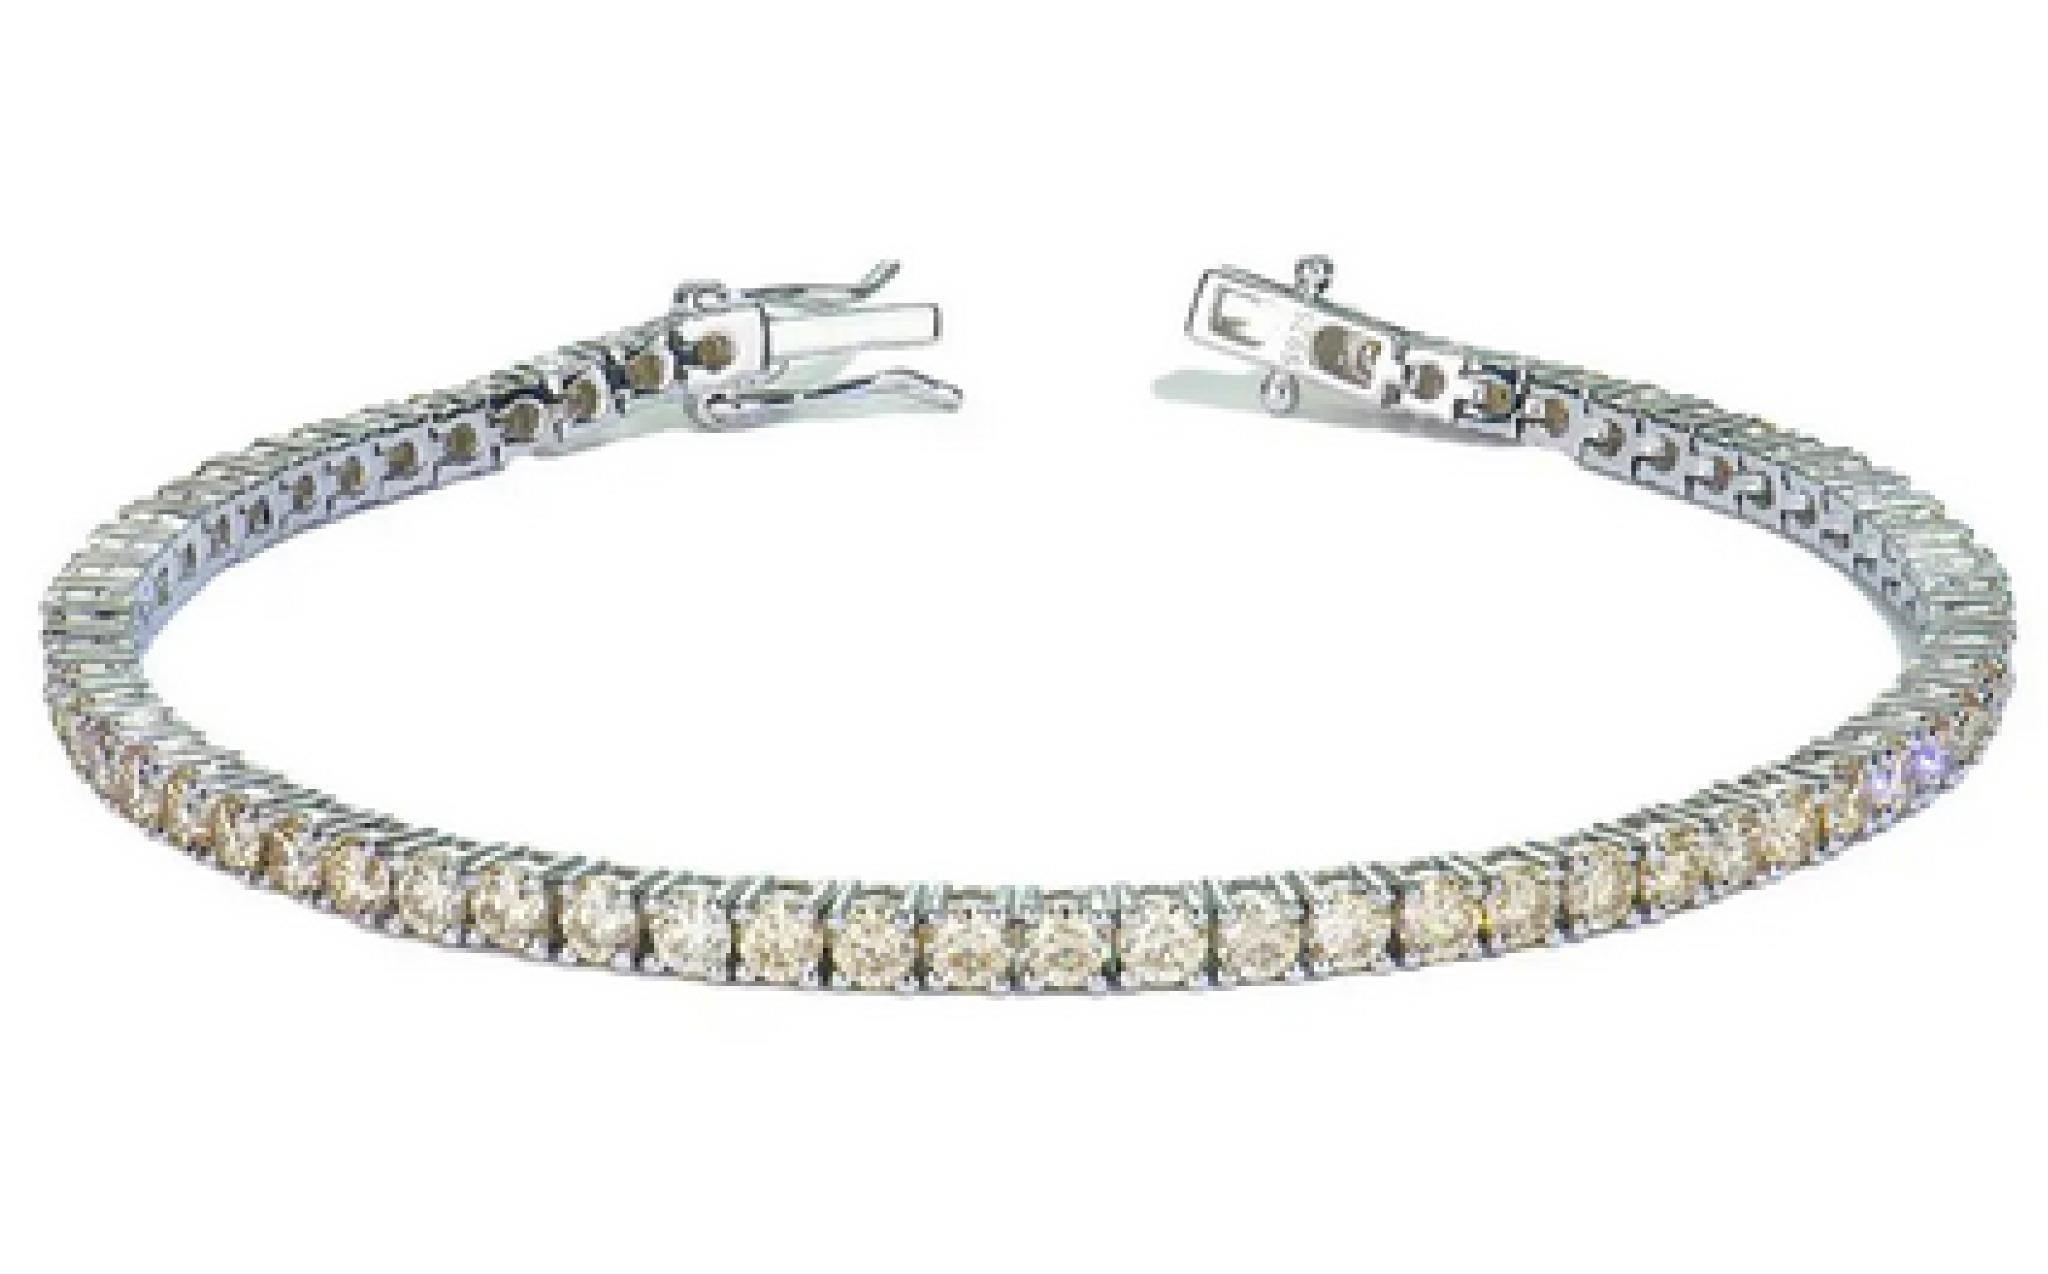 Gemsational Jewelry & Gems Auction - June 19 - 23